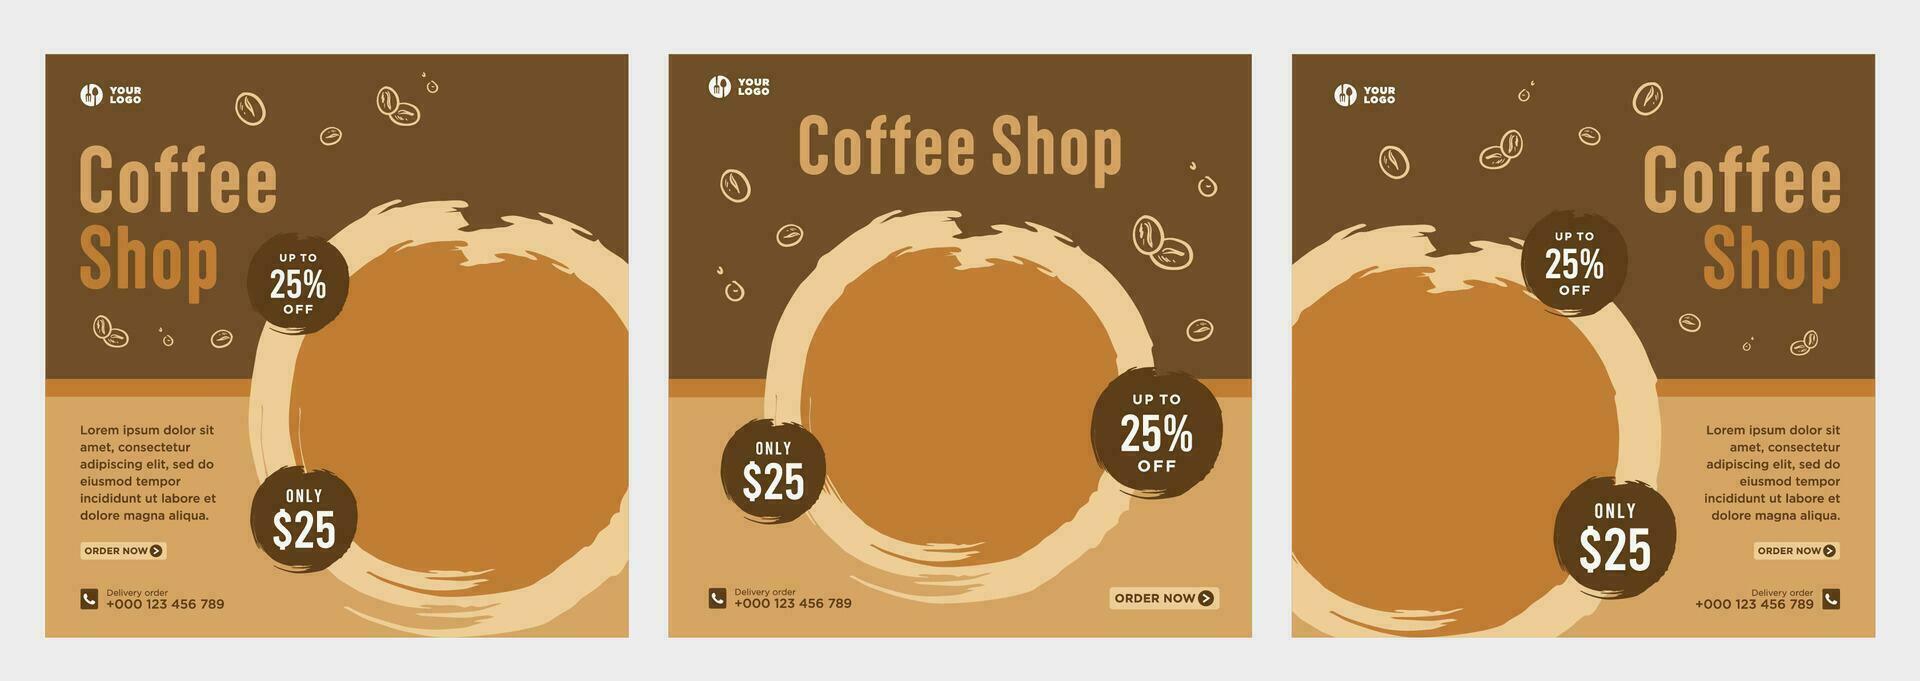 Coffee social media or banner template vector